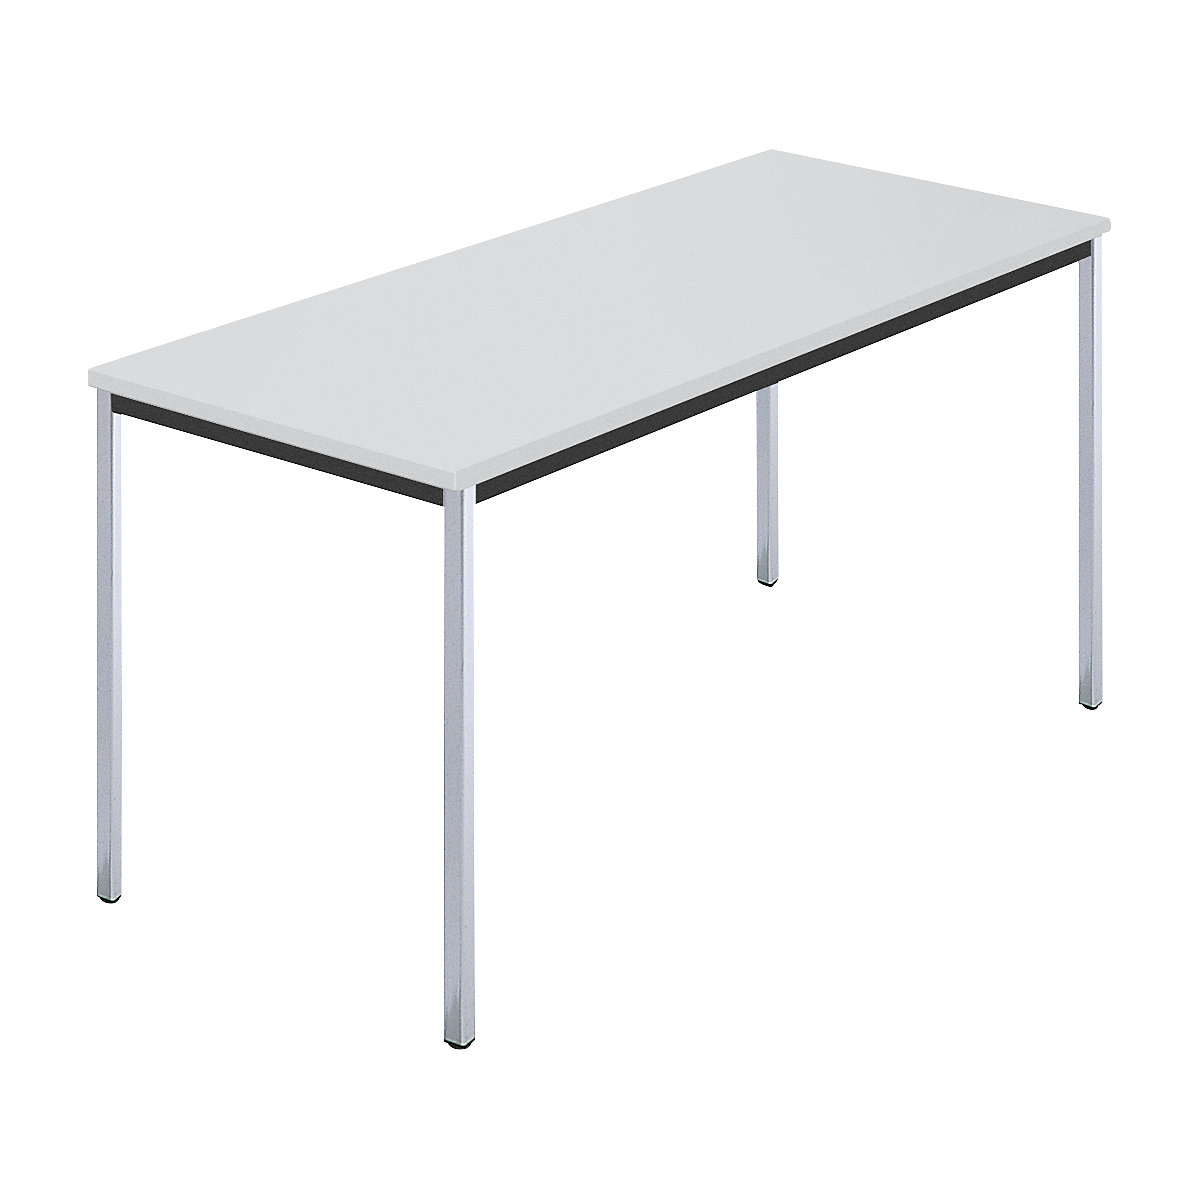 Rectangular table, square tubular steel chrome plated